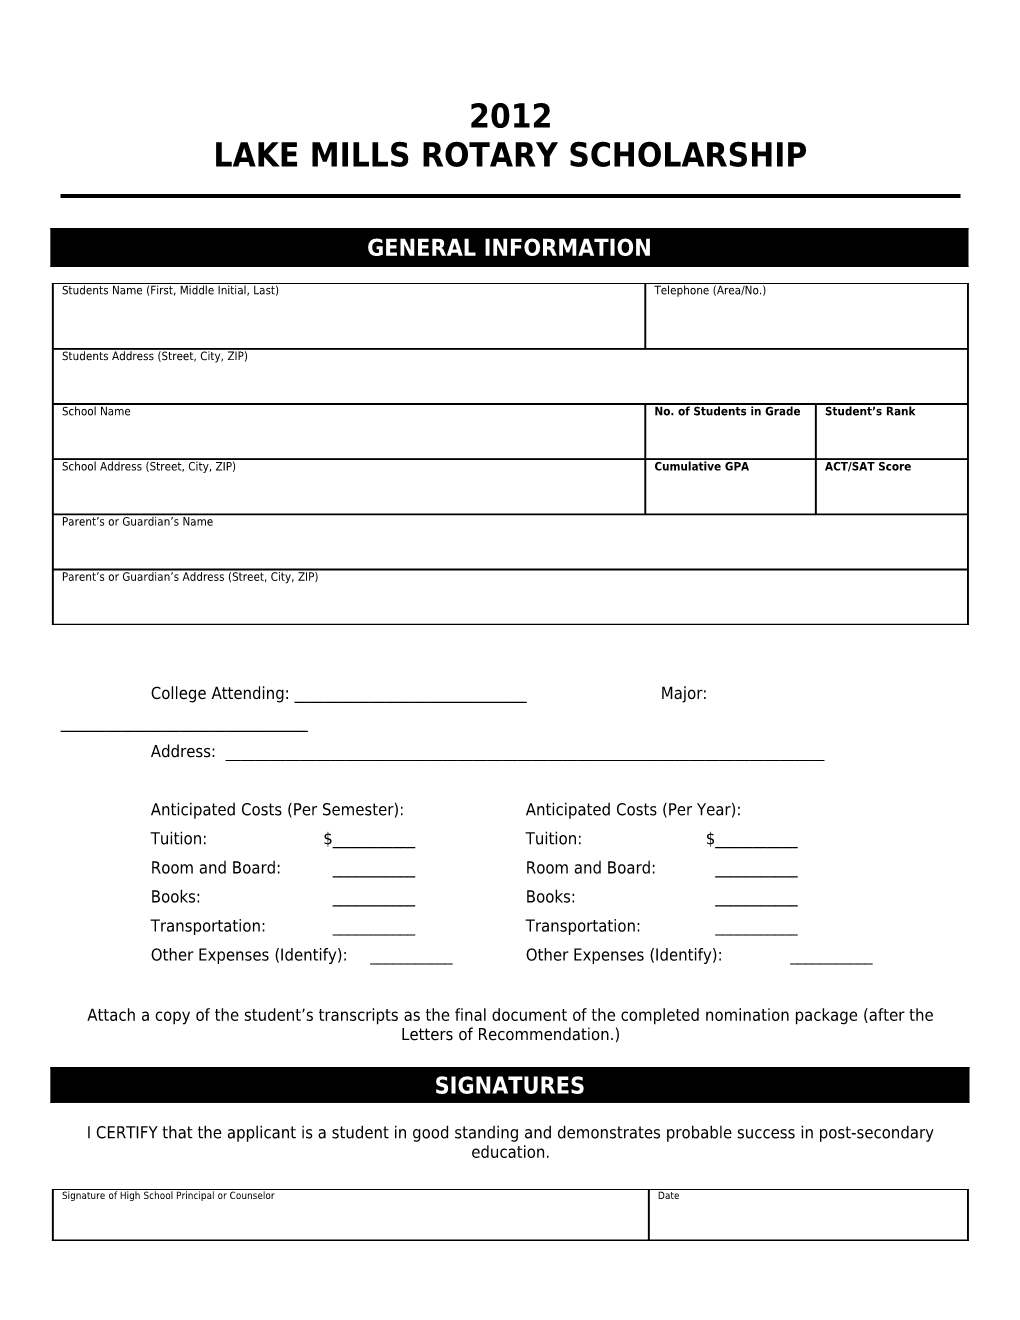 Lake Mills Rotary Scholarship